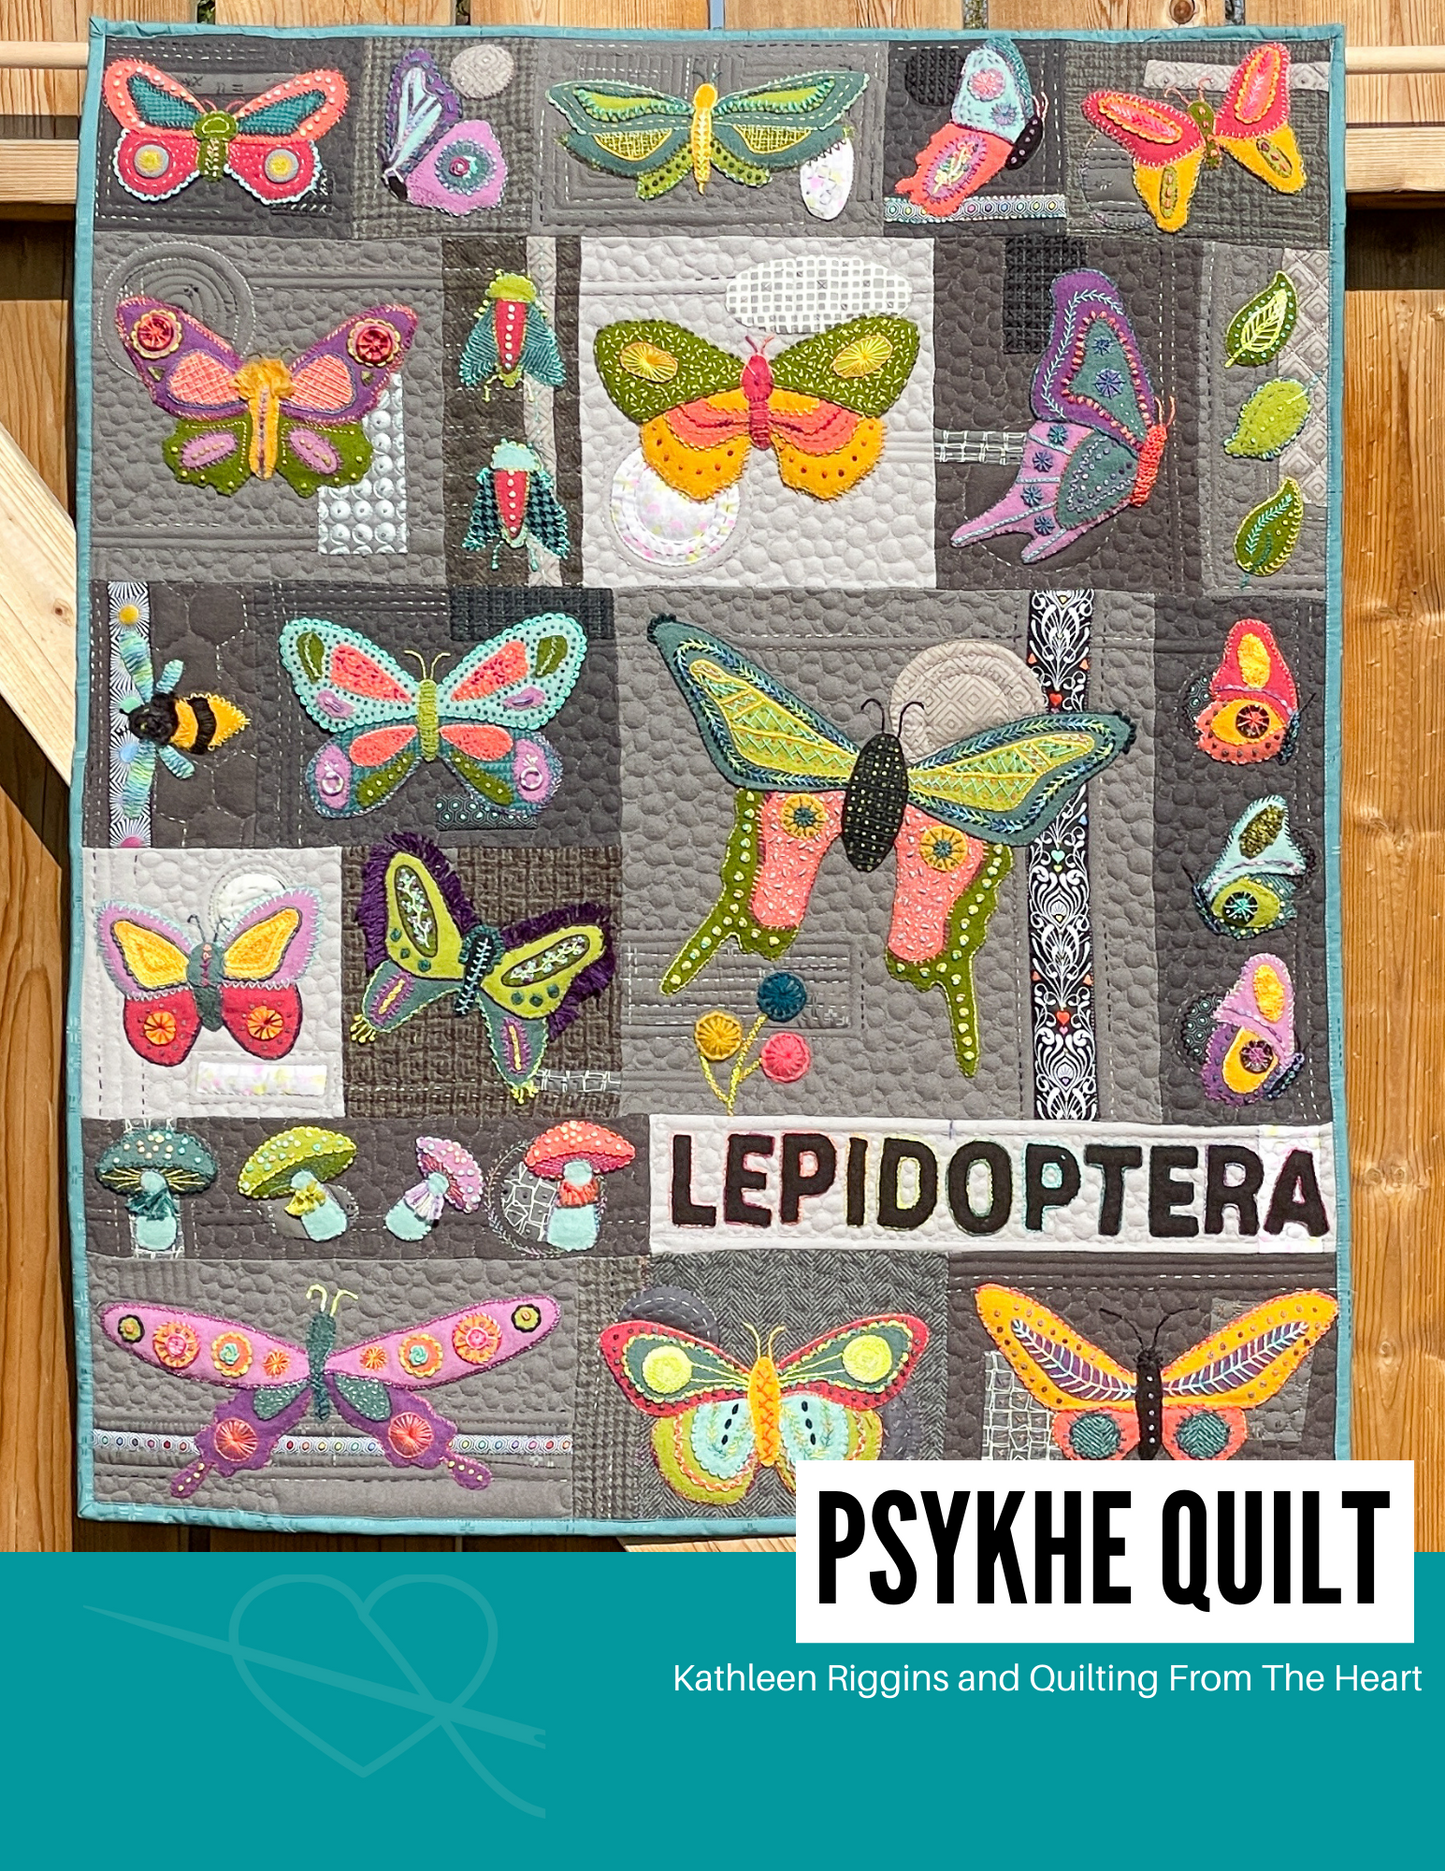 Pshyke Quilt Pattern Book - Kathleen Riggins